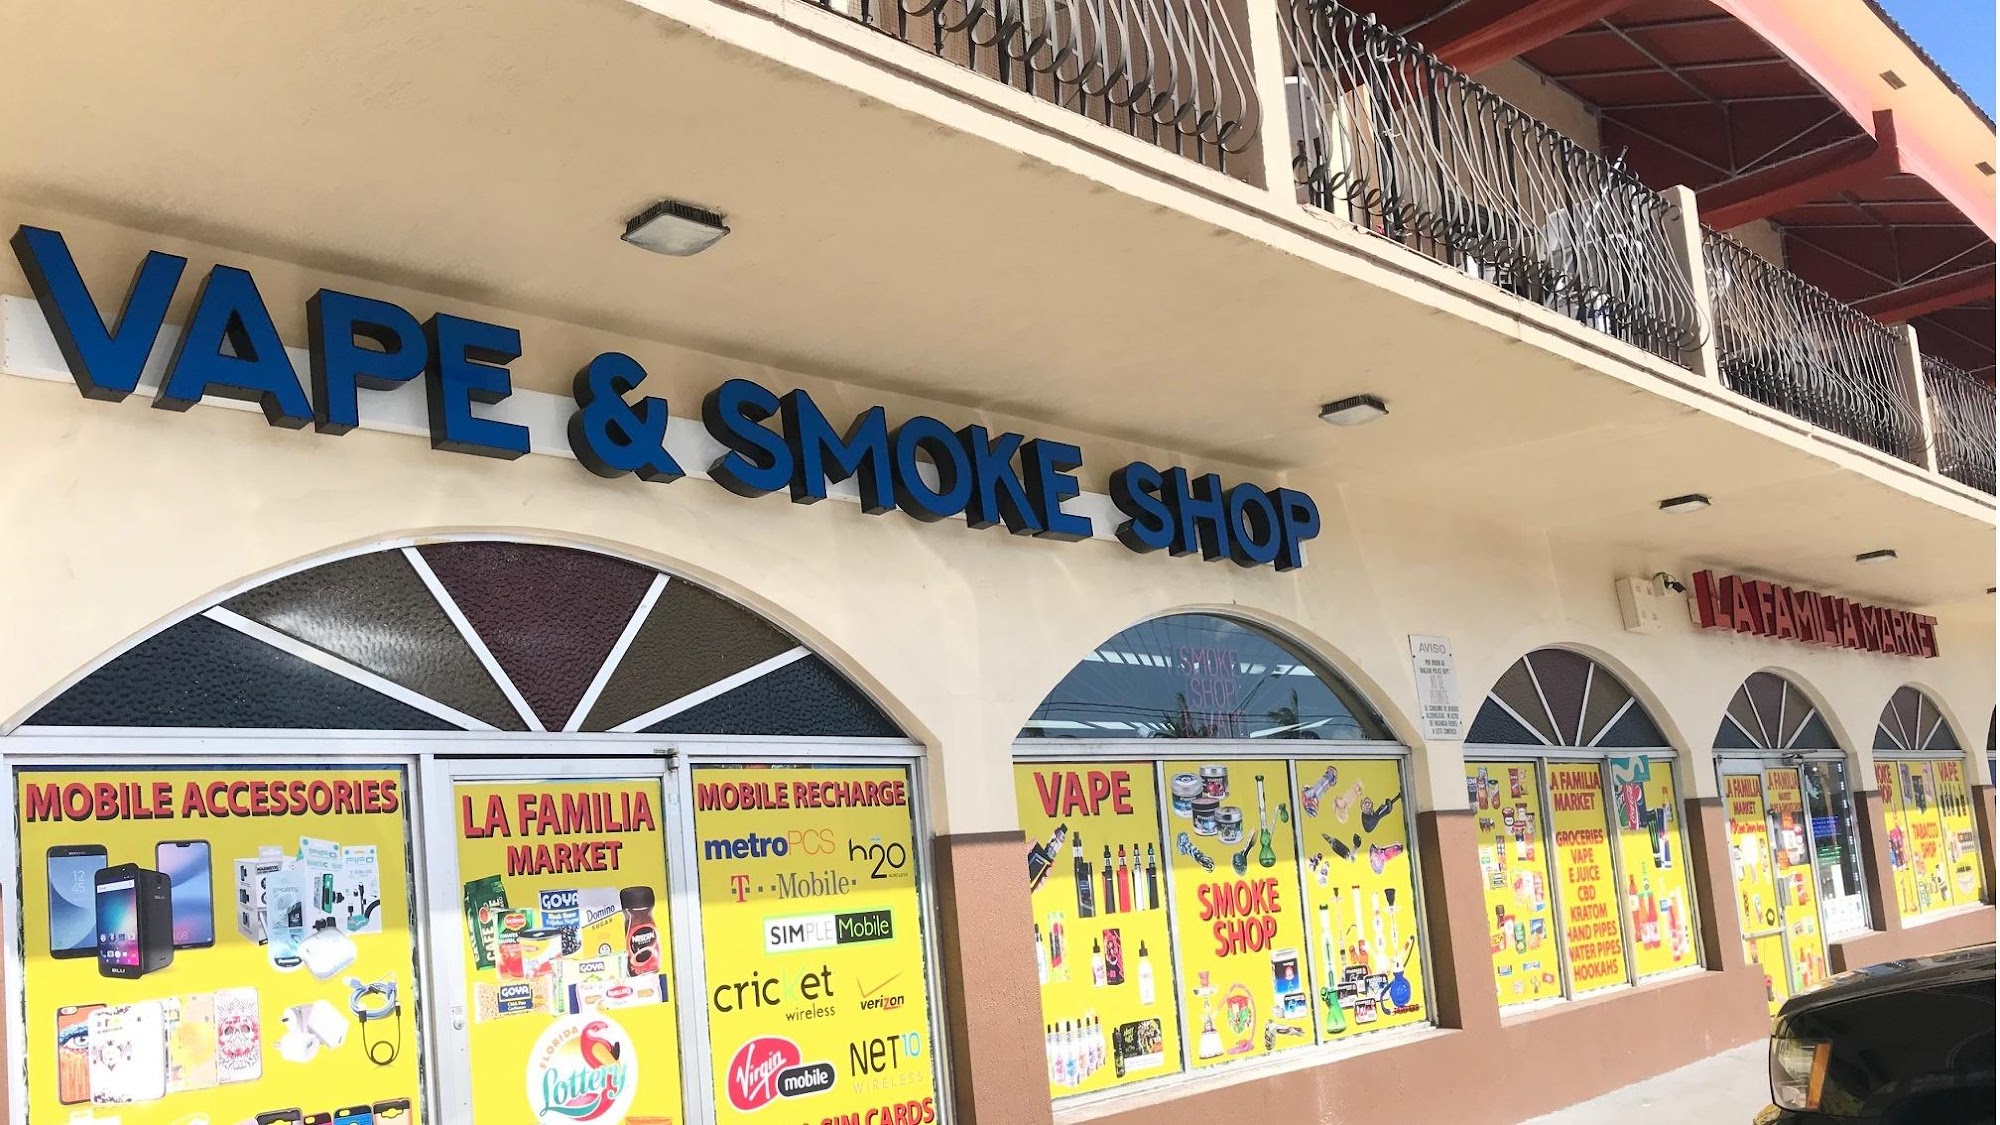 La Familia Tobacco - Vape & Smoke Shop